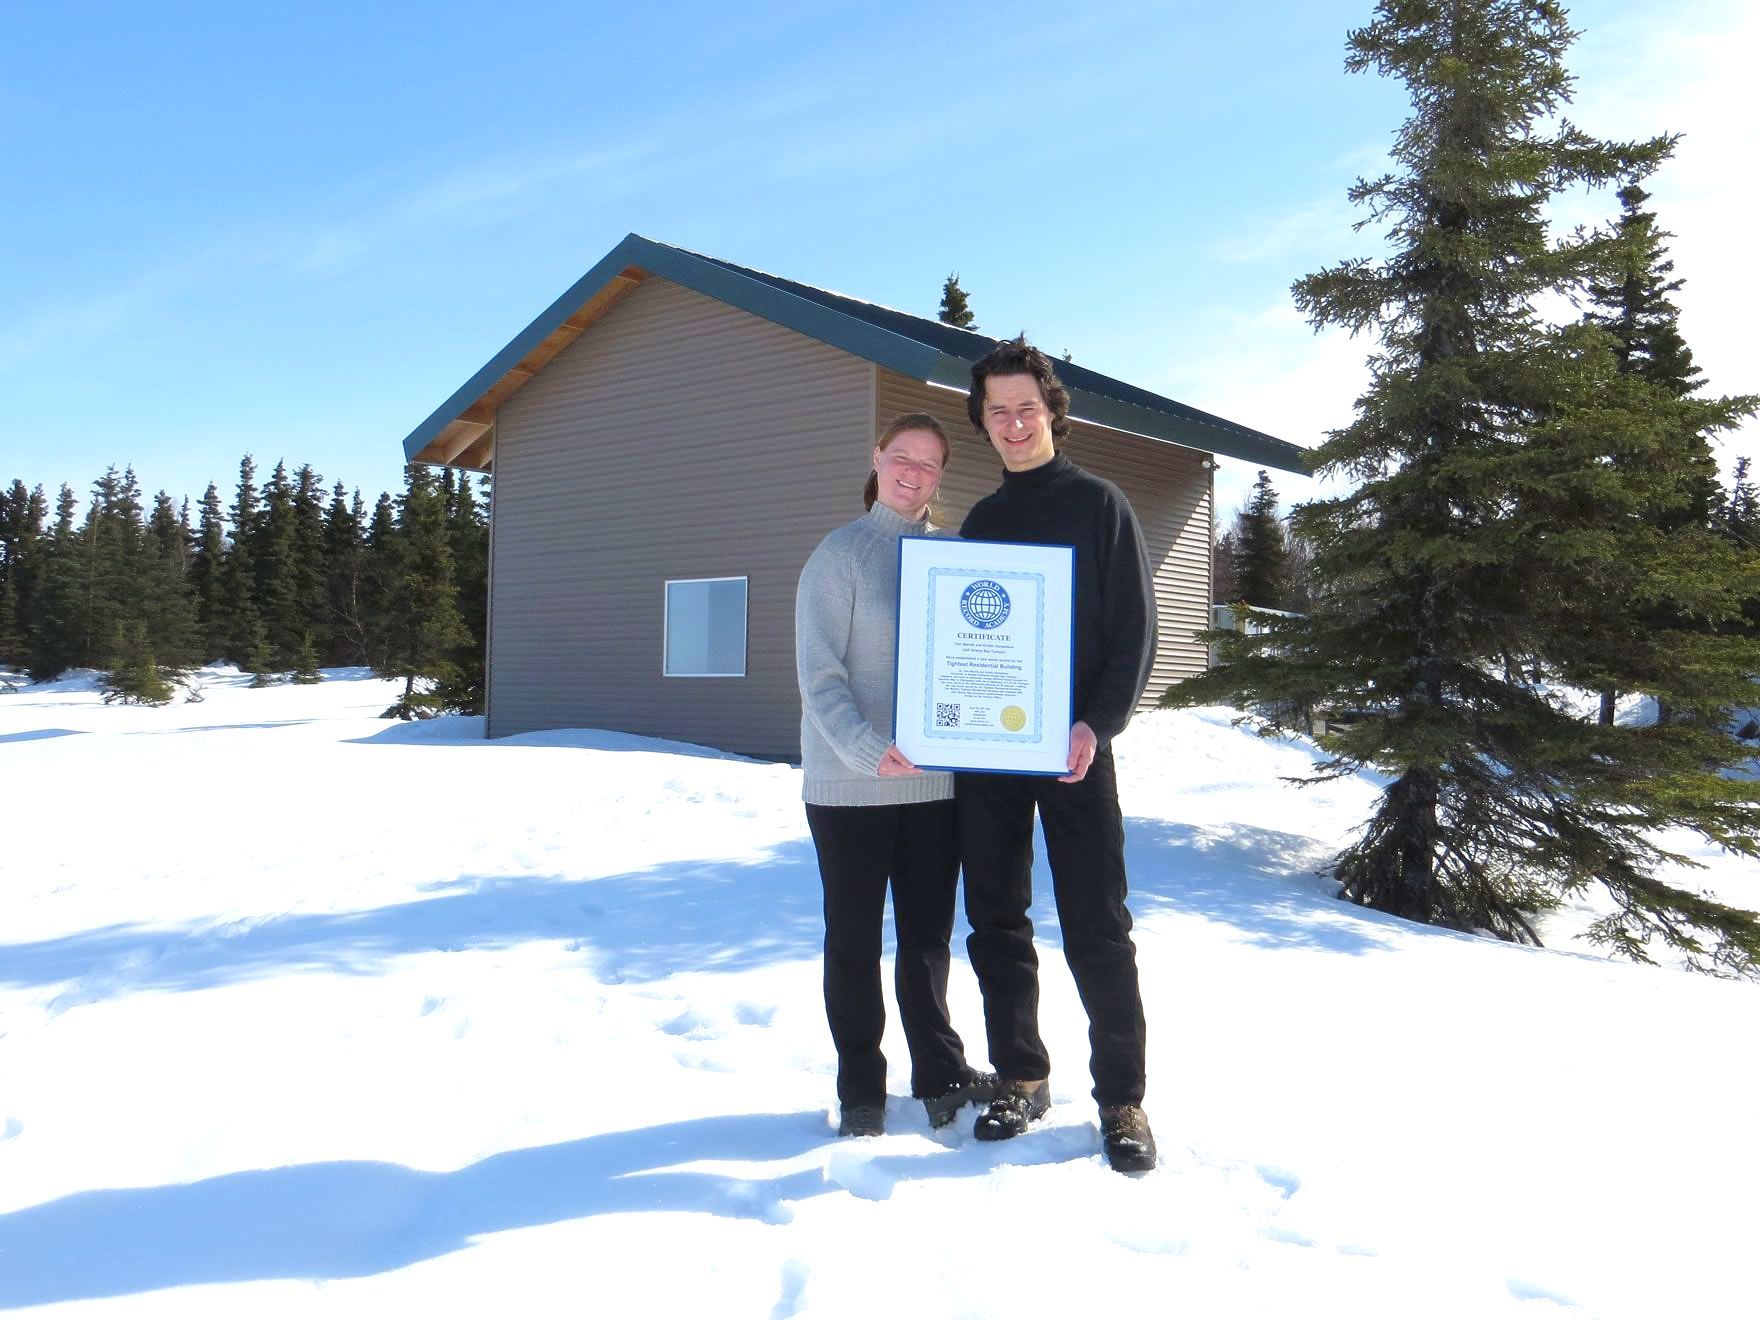 World's Tightest Residential Building, world record in Dillingham, Alaska